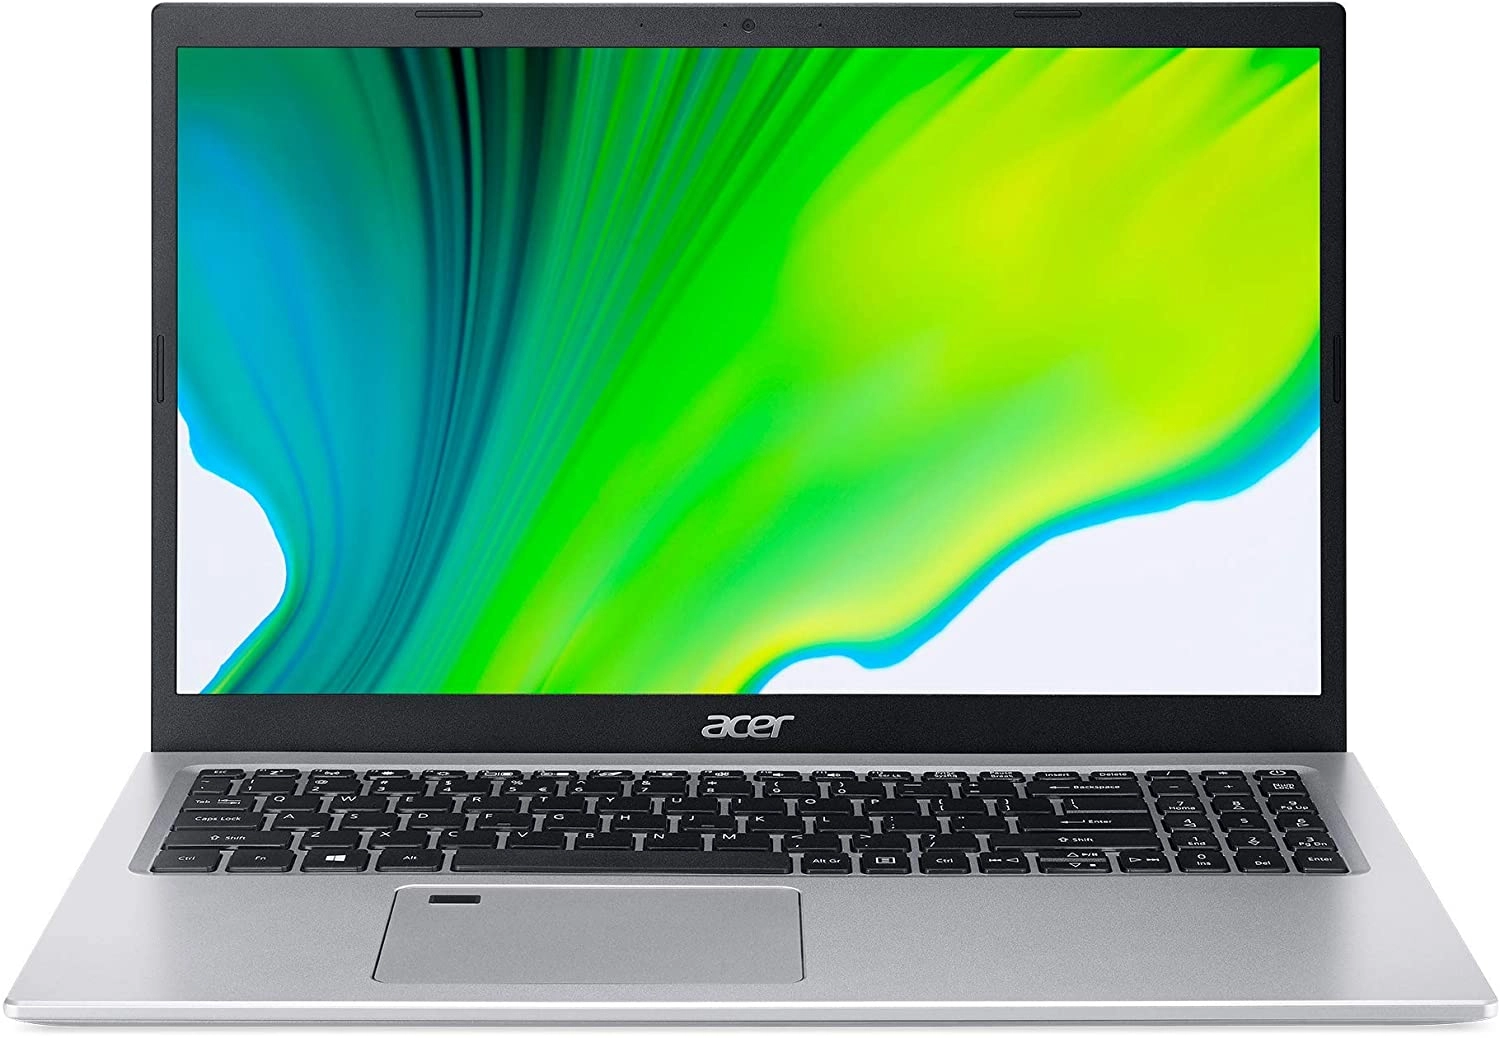 Acer A515-56 laptop image